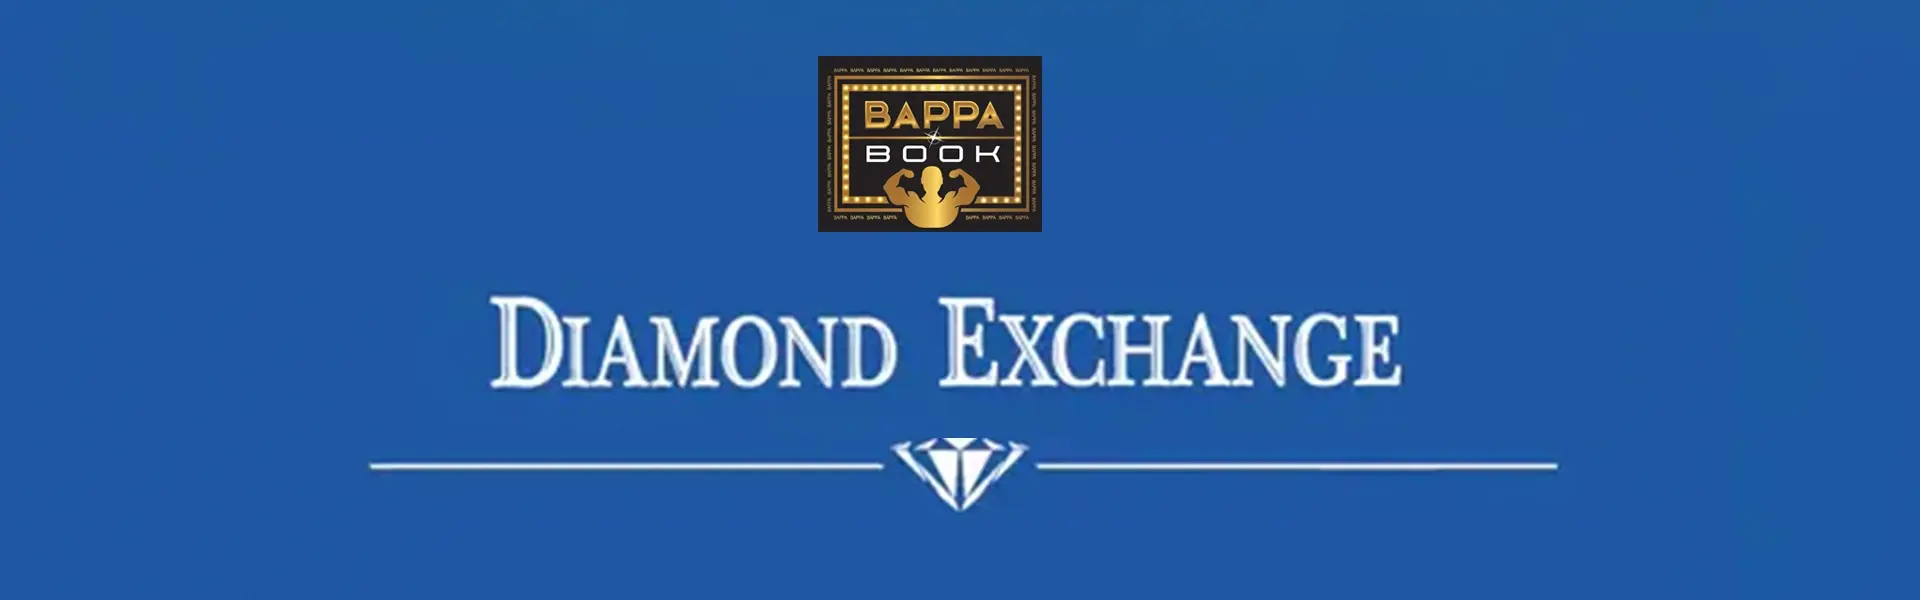 bappaonlinebook Diamond Exchange Id